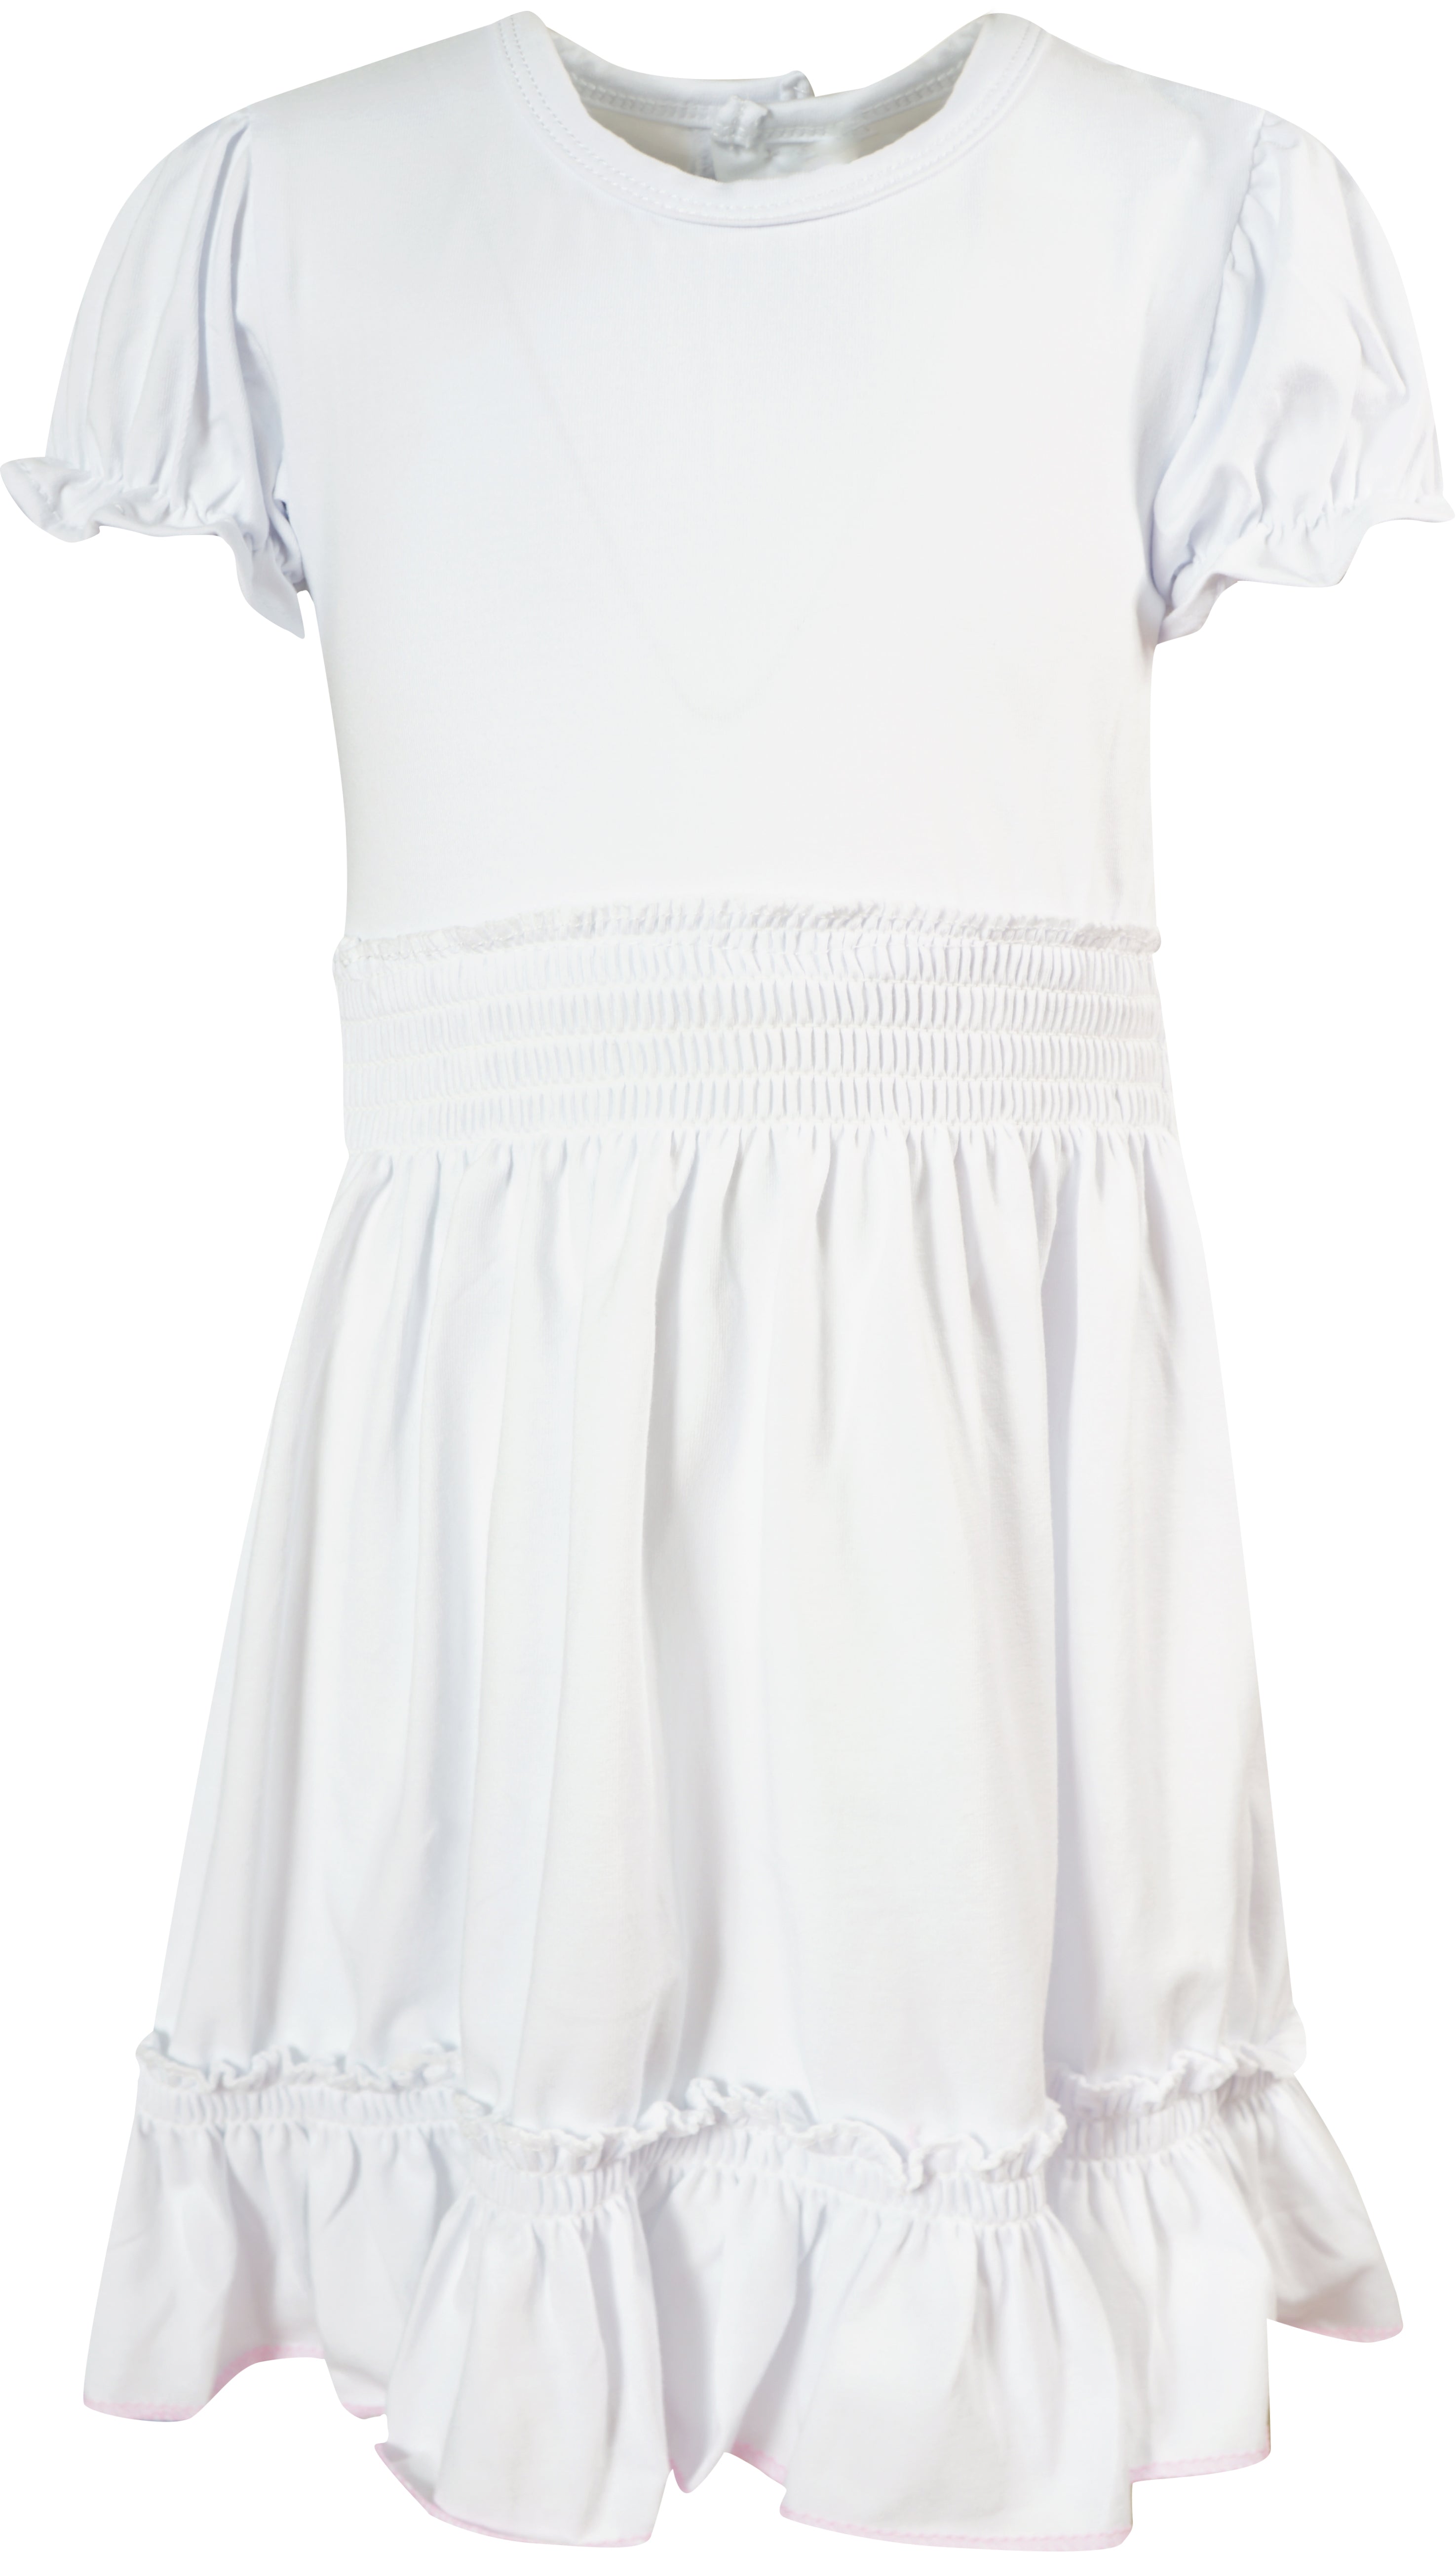 Little Girls Spring Summer Fall Elastic Waist Lap Dress - Mint, White - Angeline Kids